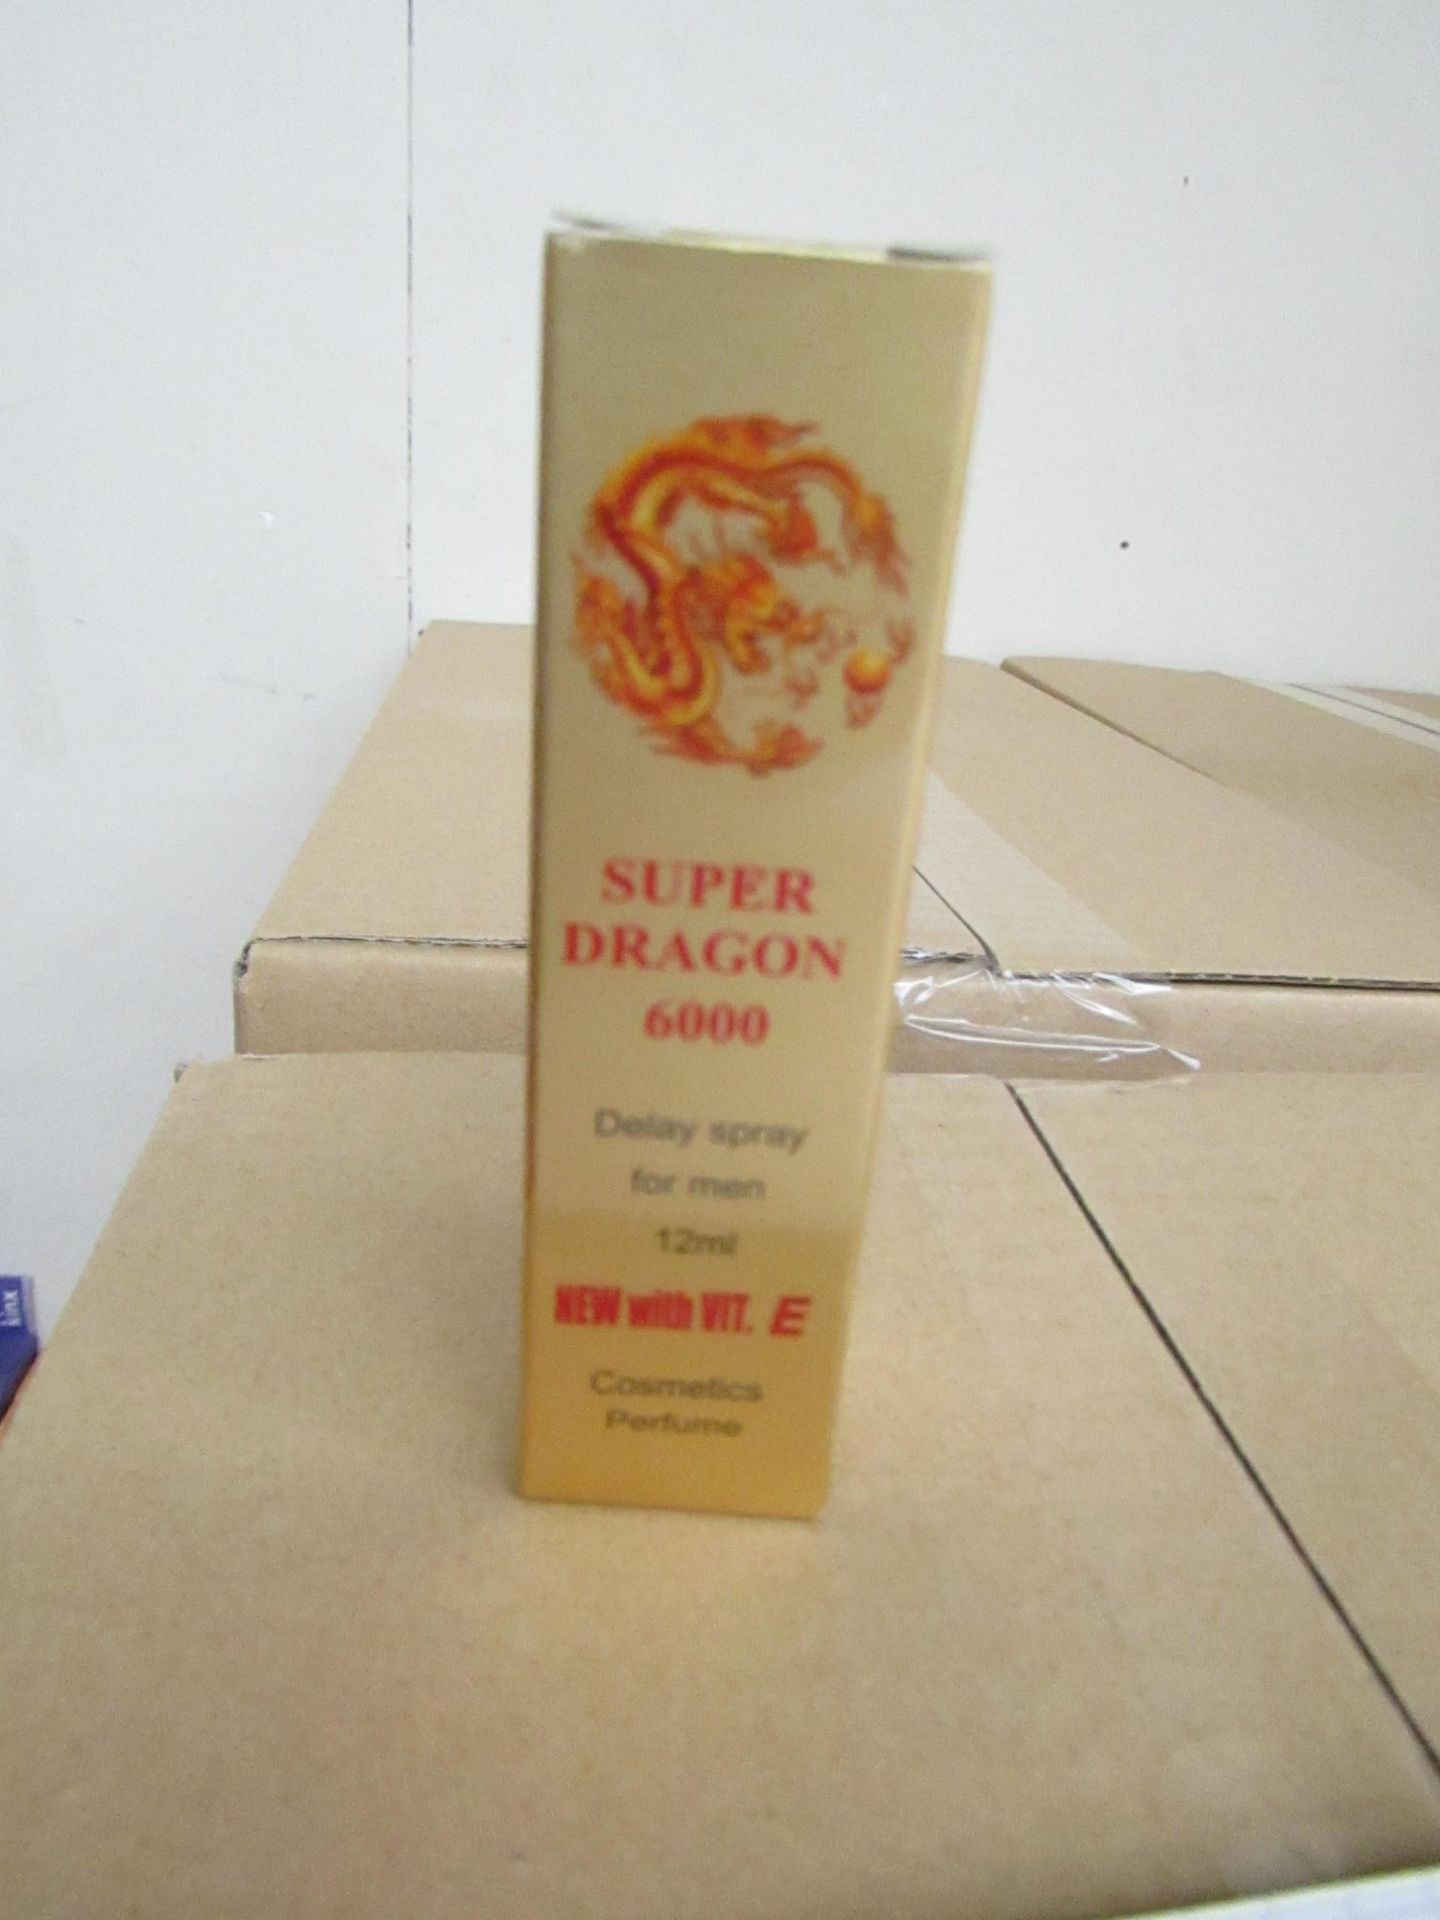 Super Dragon 6000 Delay Spray For Men.12ml. Looks unused